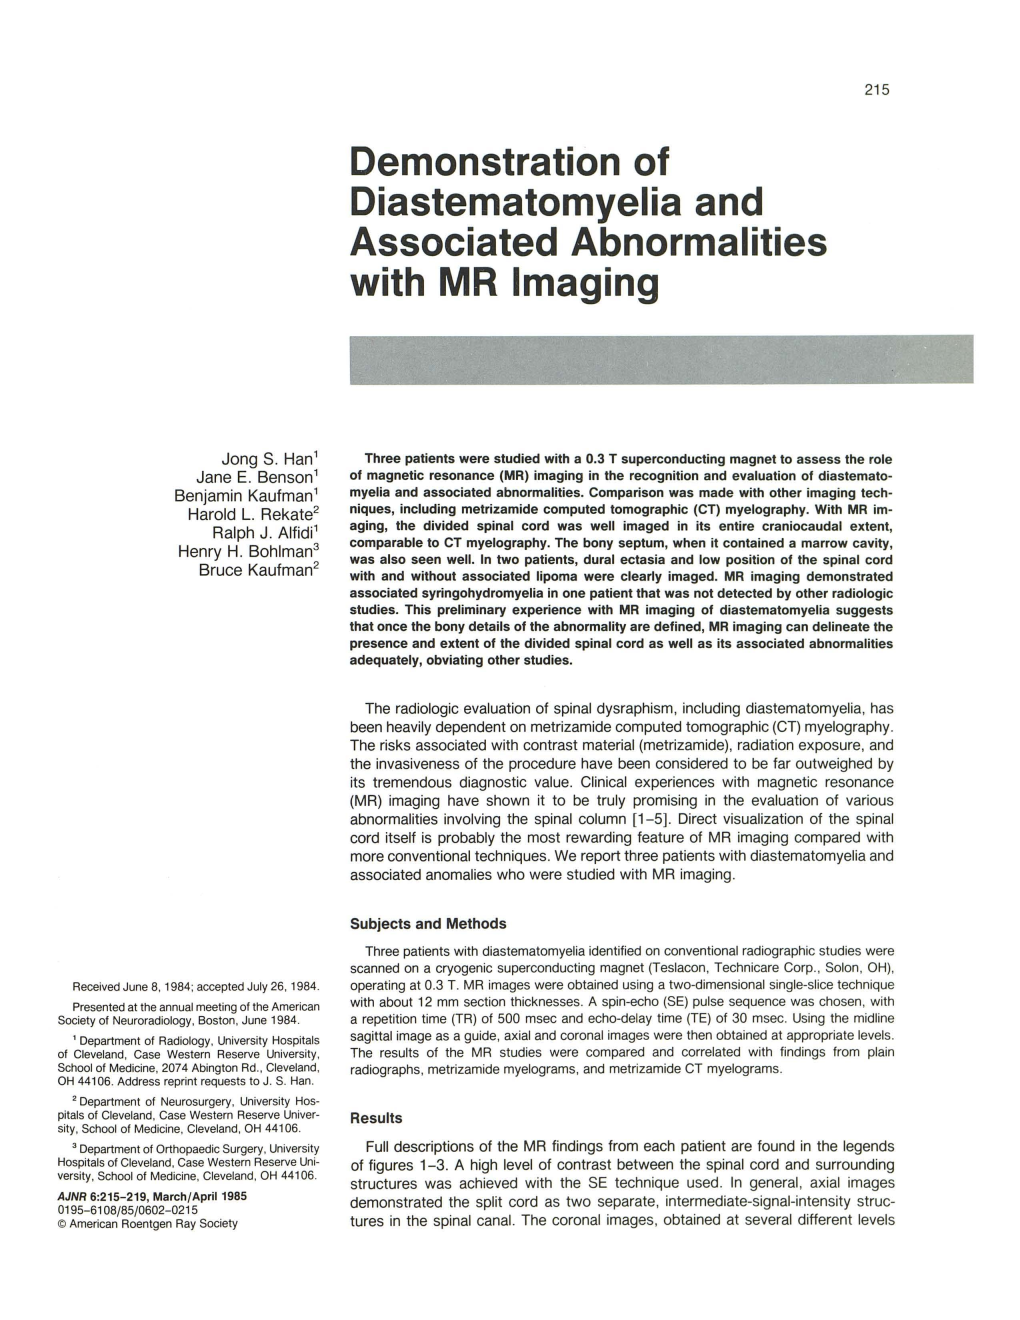 Demonstration of Diastematomyelia and Associated Abnormalities with MR Imaging